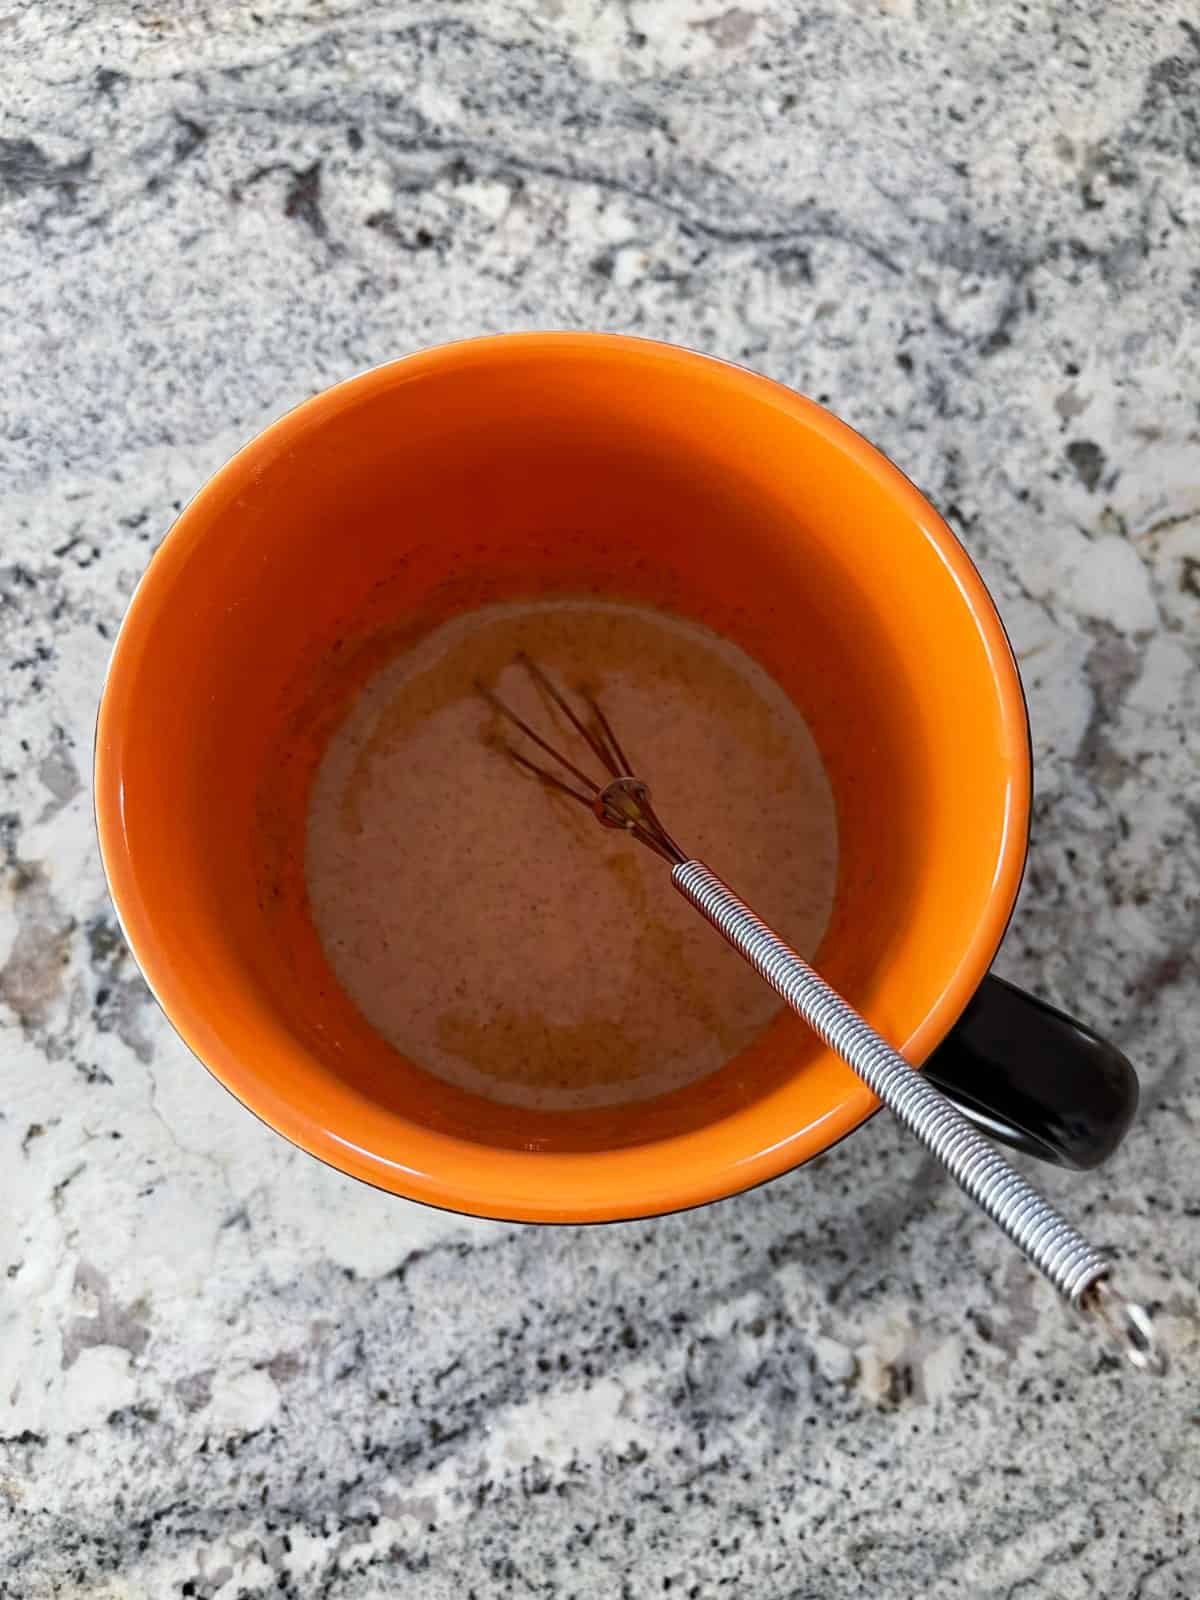 Whisking gingerbread batter in orange mug.